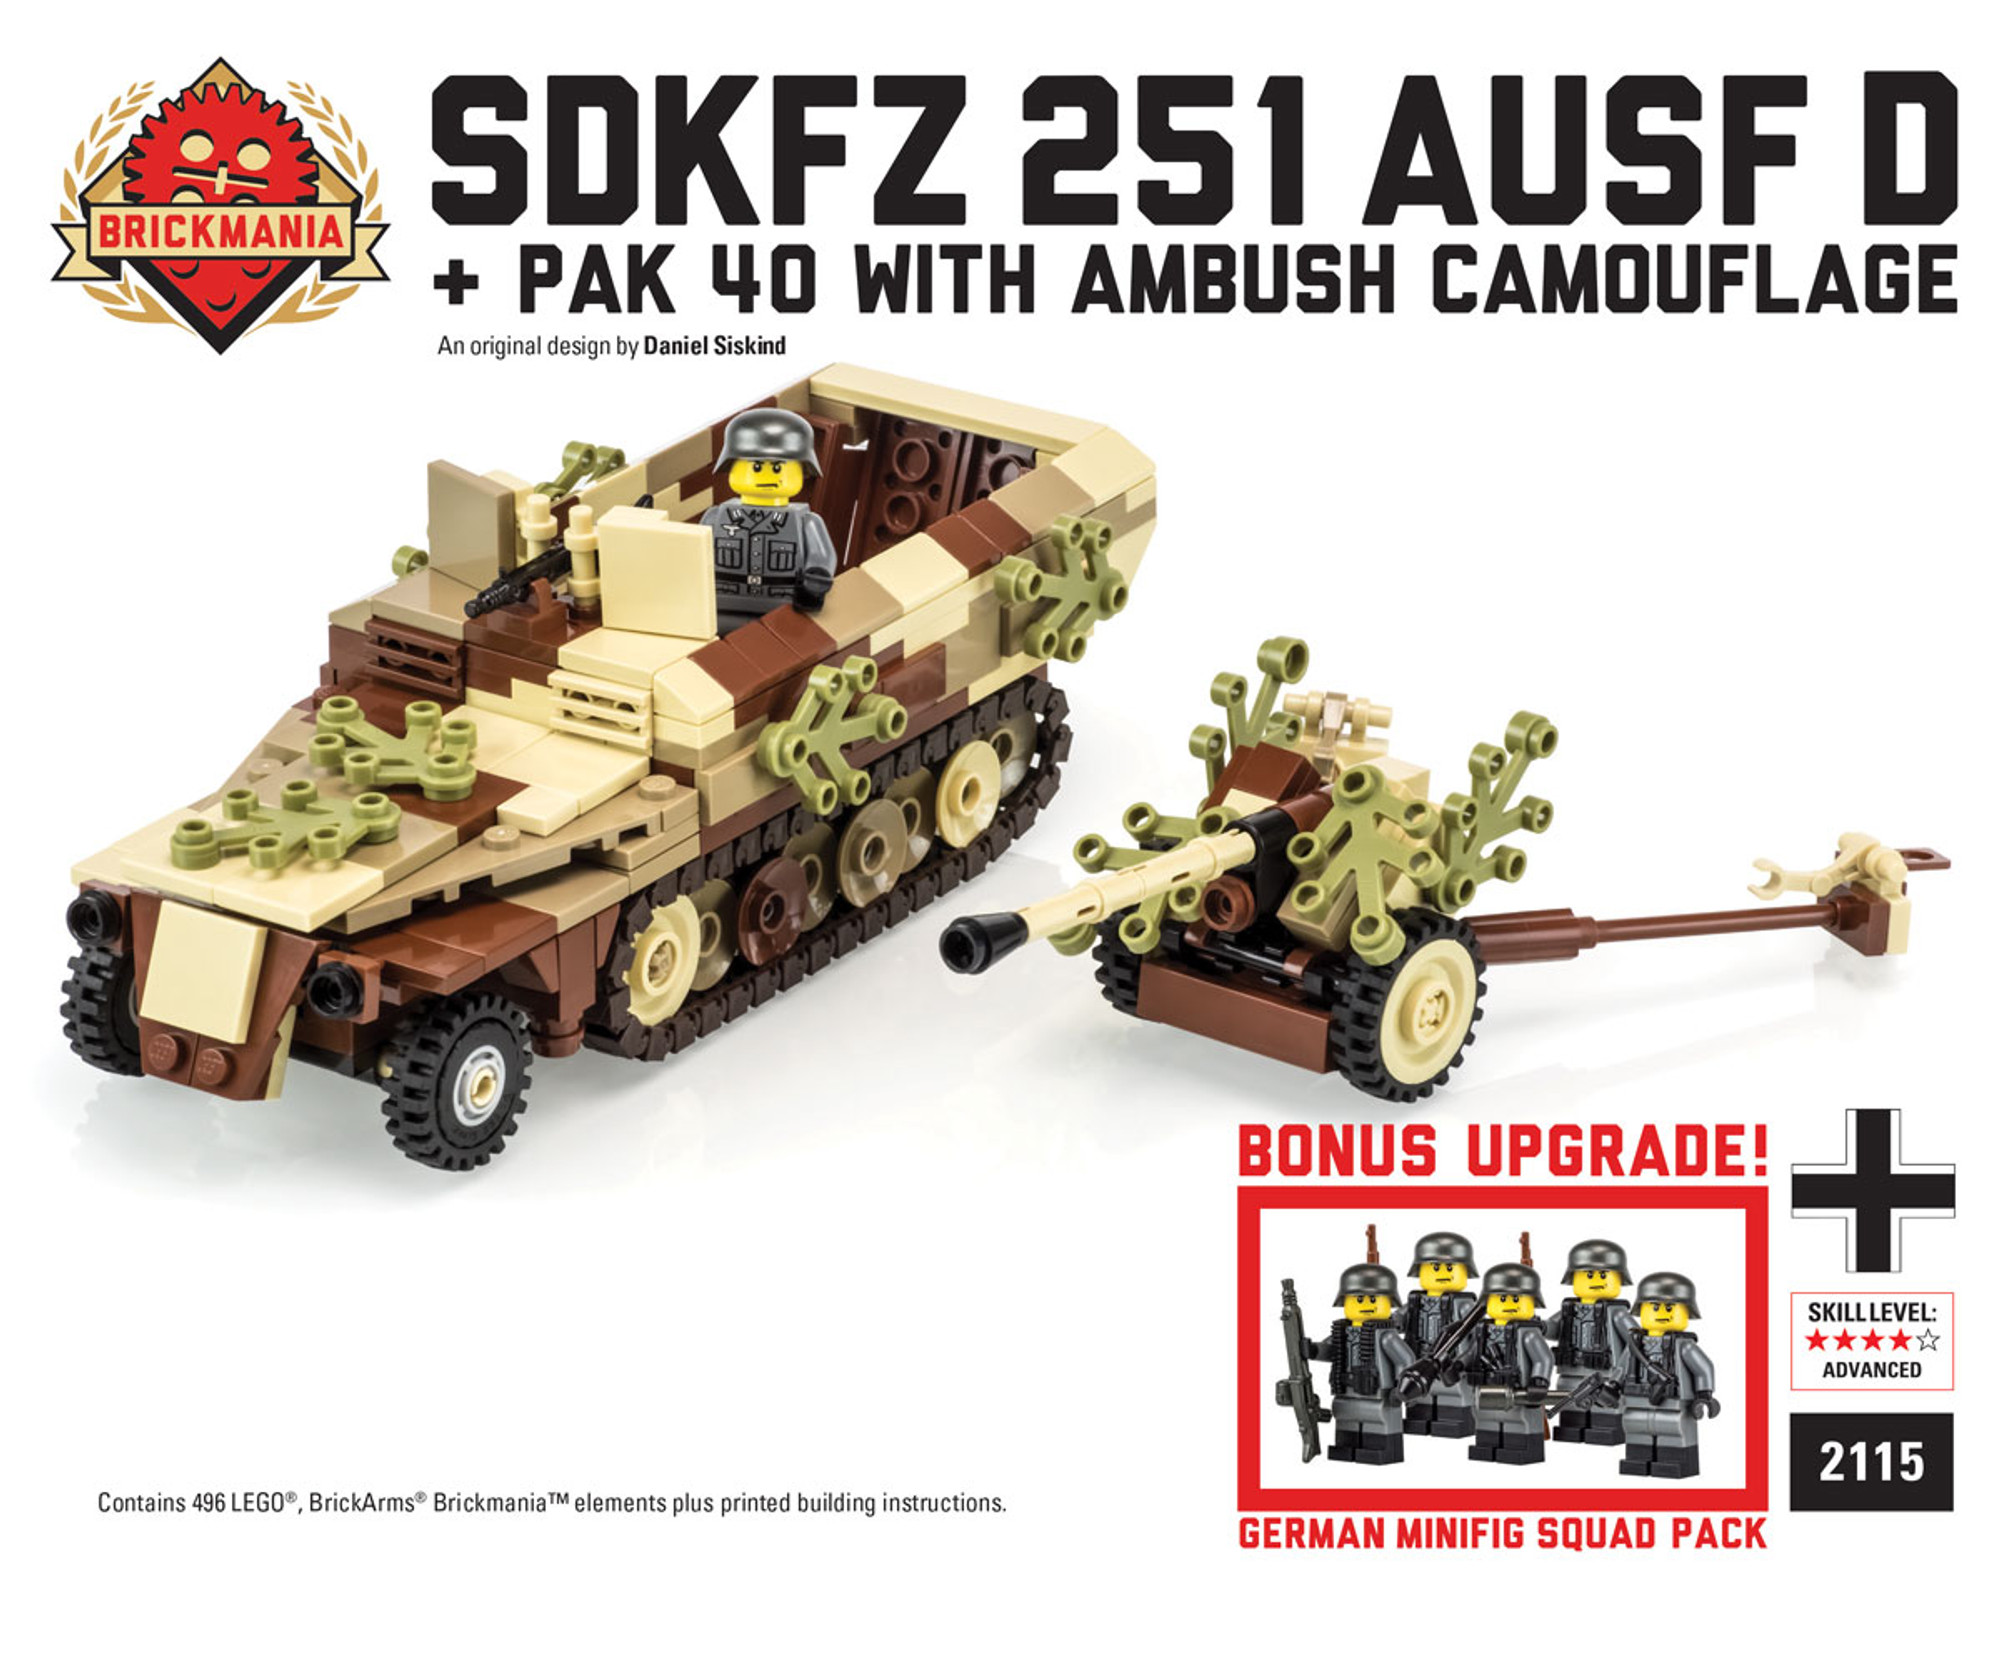 SdKfz 251 ausf D + Pak 40 with Ambush Camo and Bonus WWII German Minifig  Squad Pack